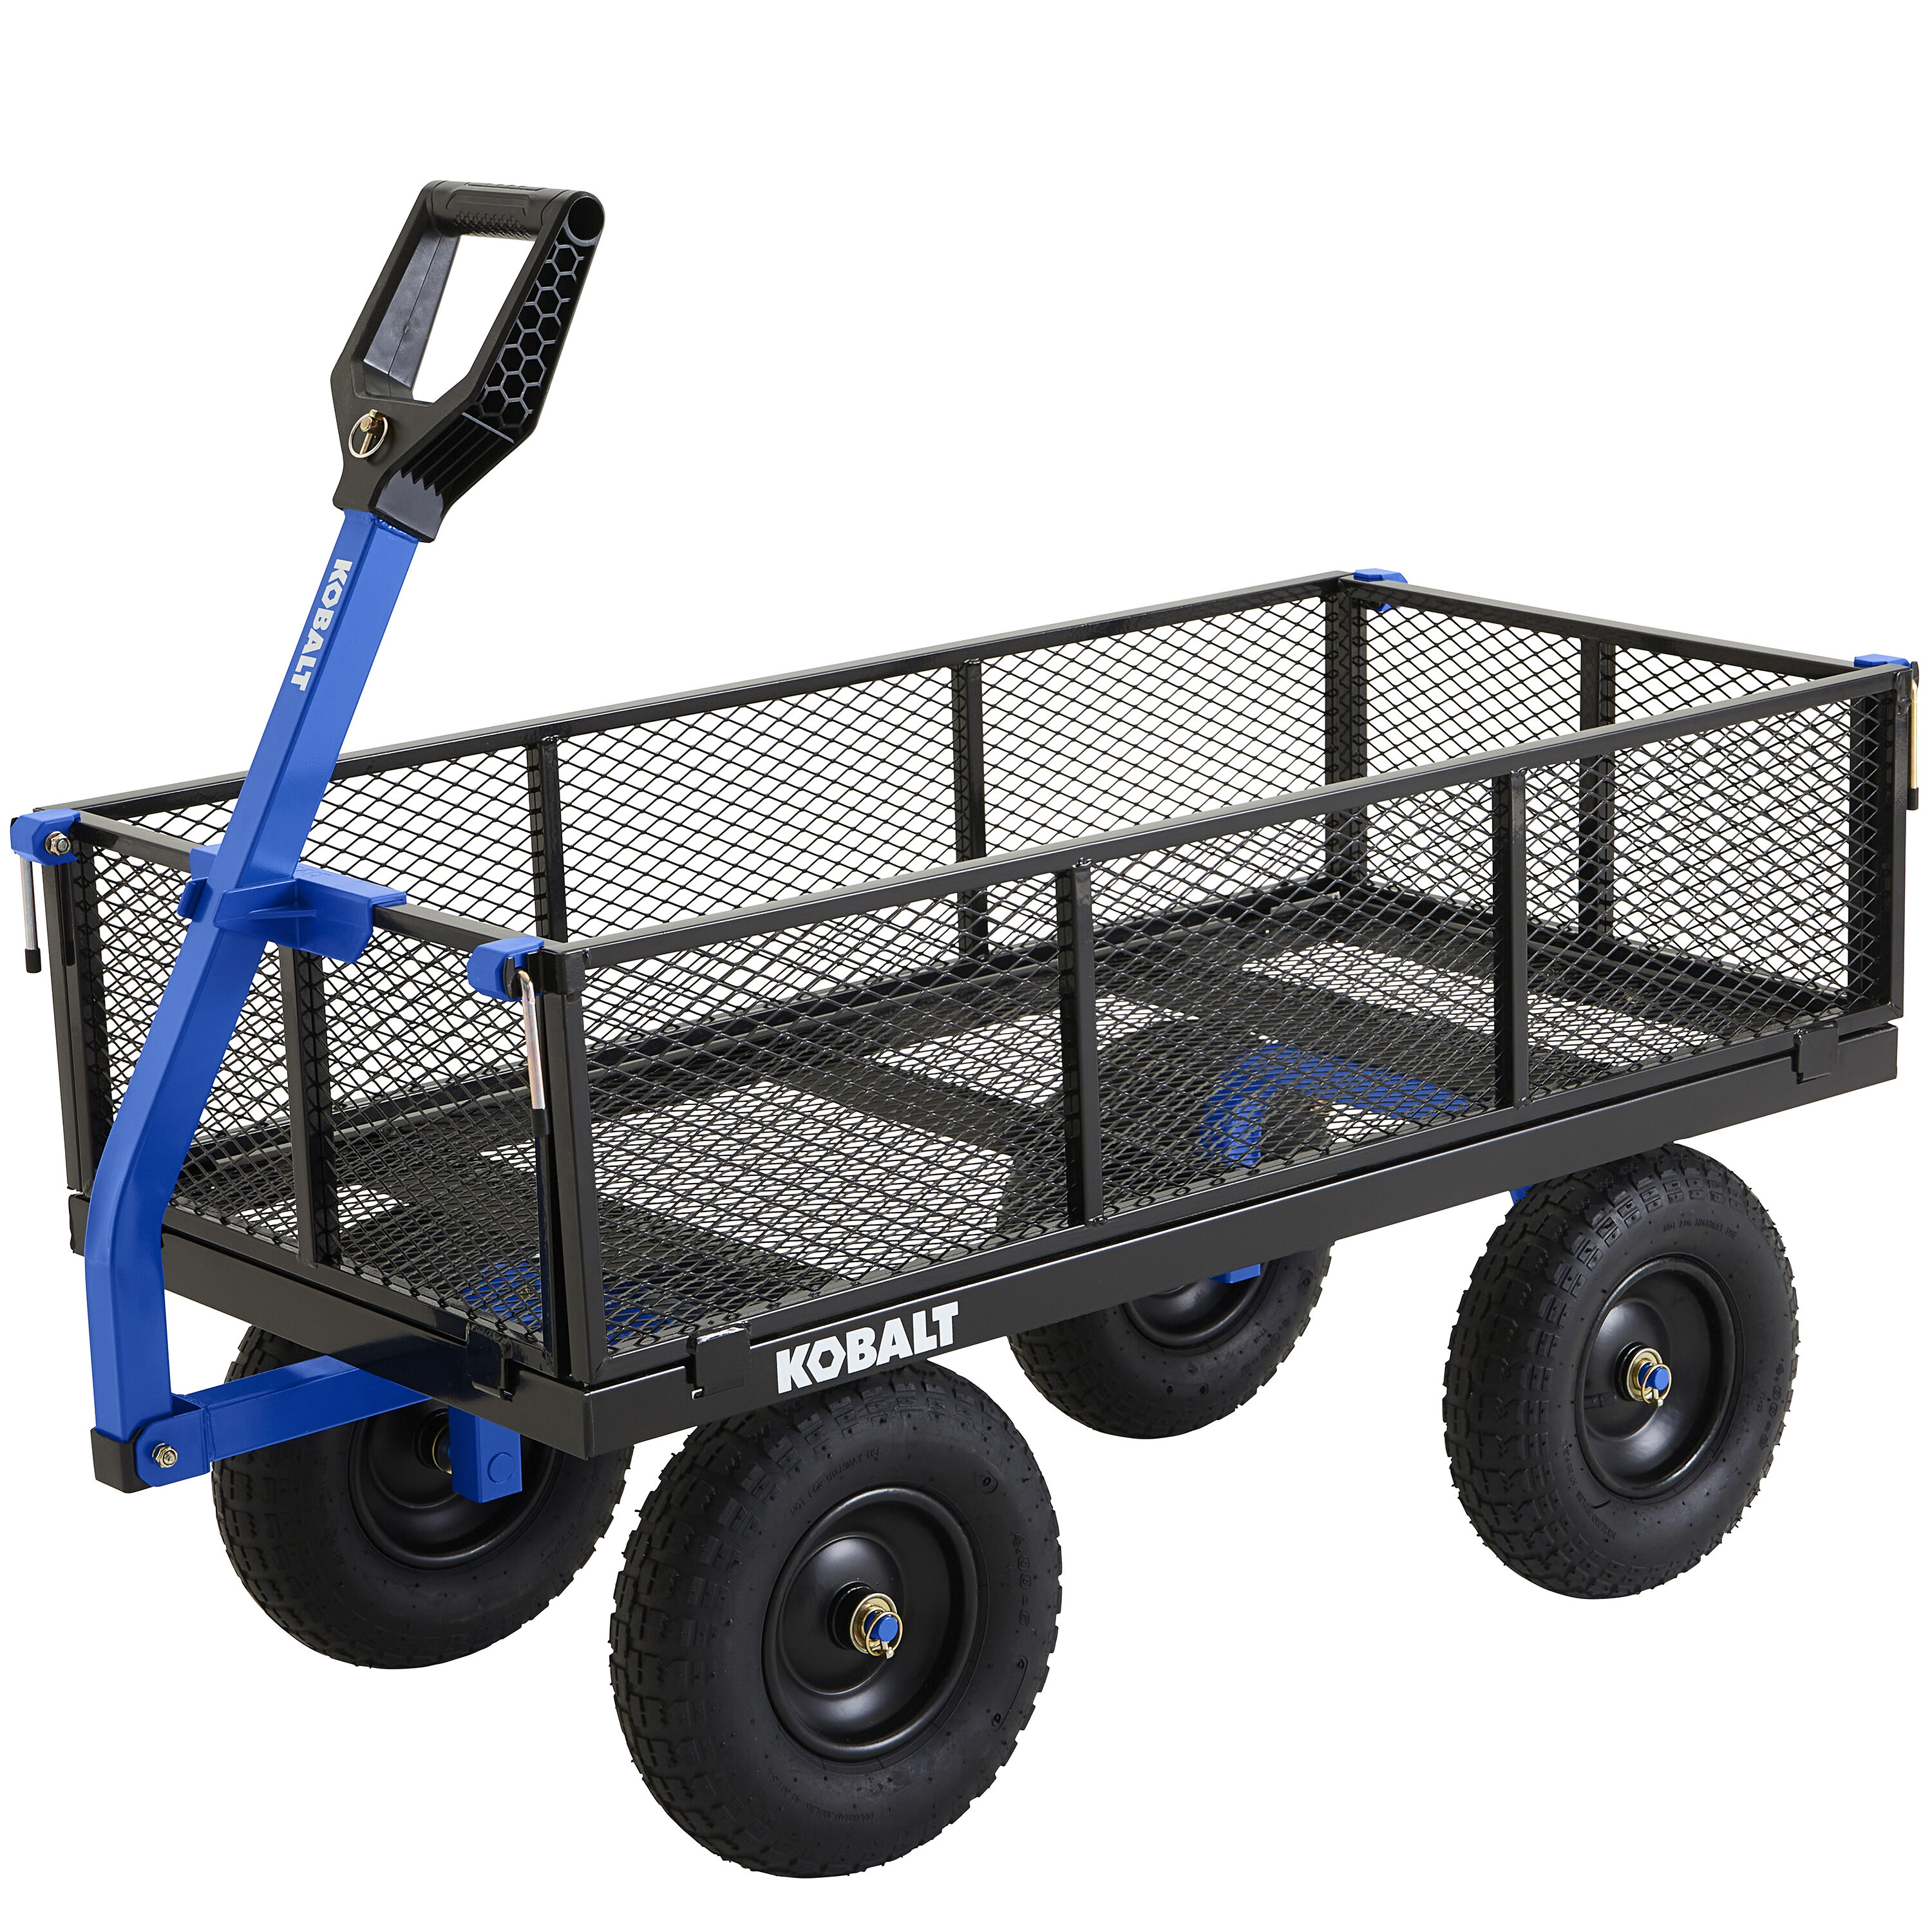 KNOXC Folding G-Arden Trolley Cart Heavy Duty Wagon Multi-Function